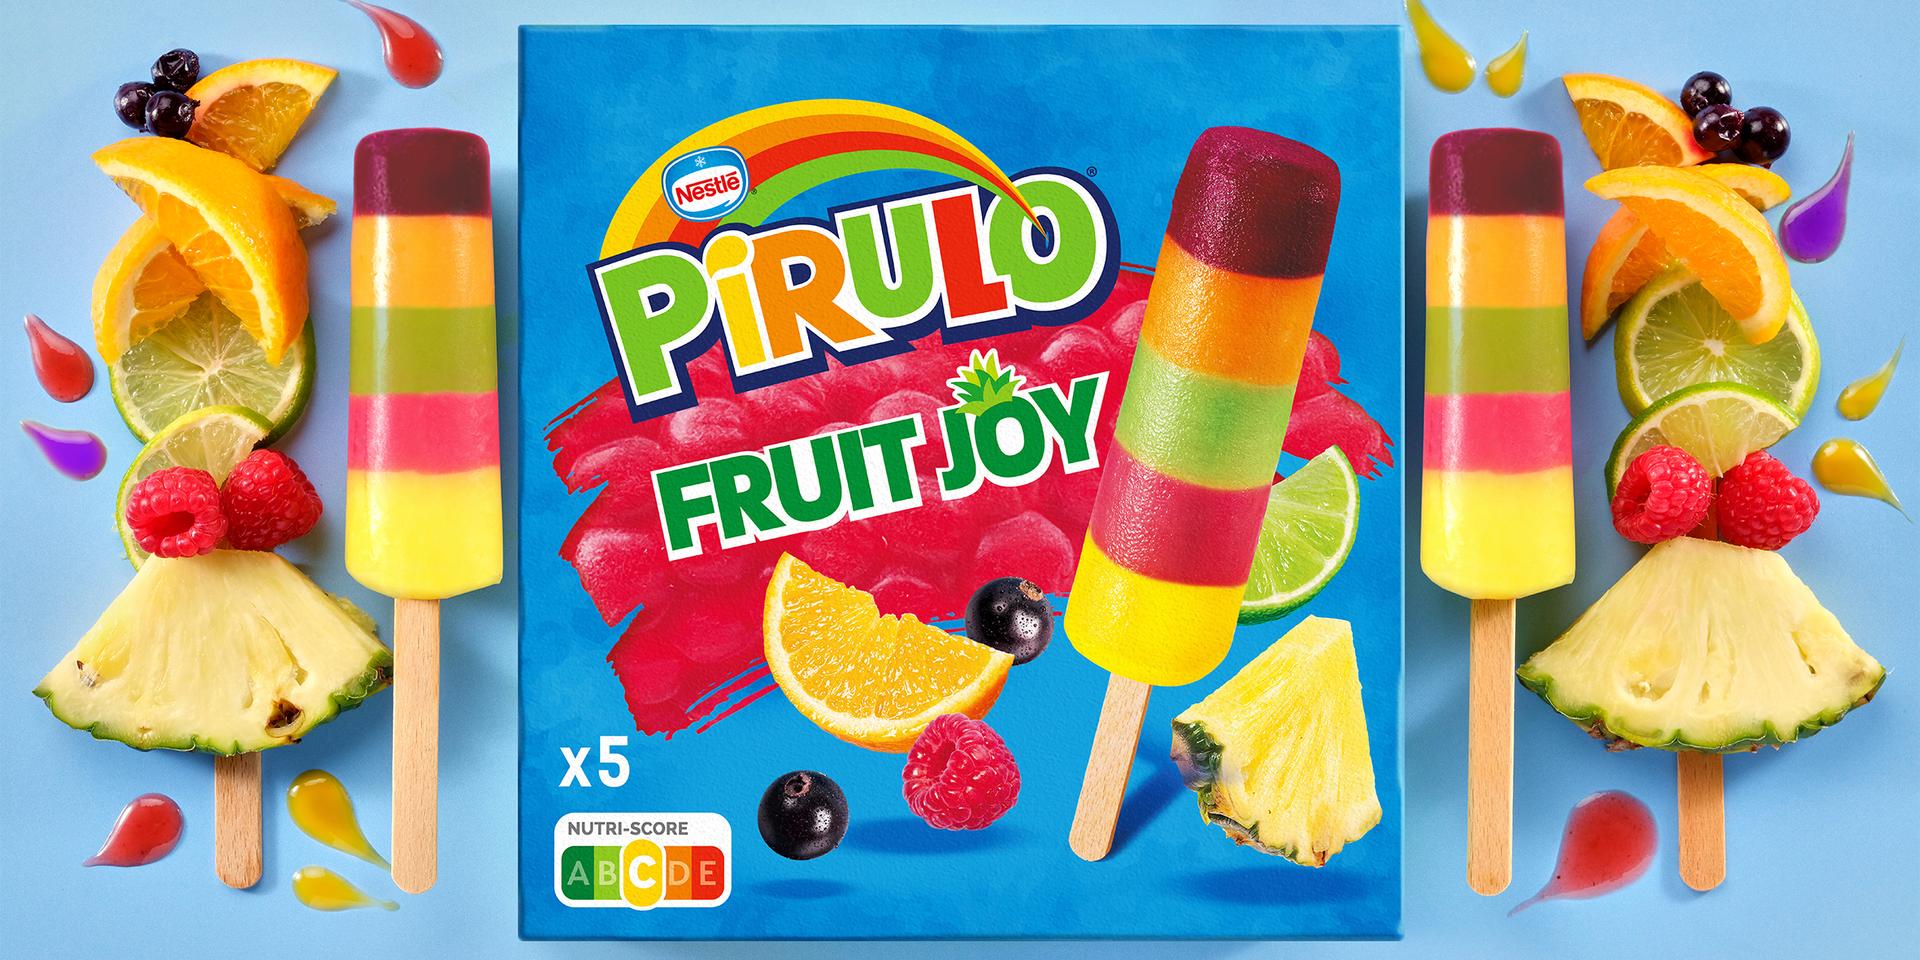 Pirulo Fruit Joy